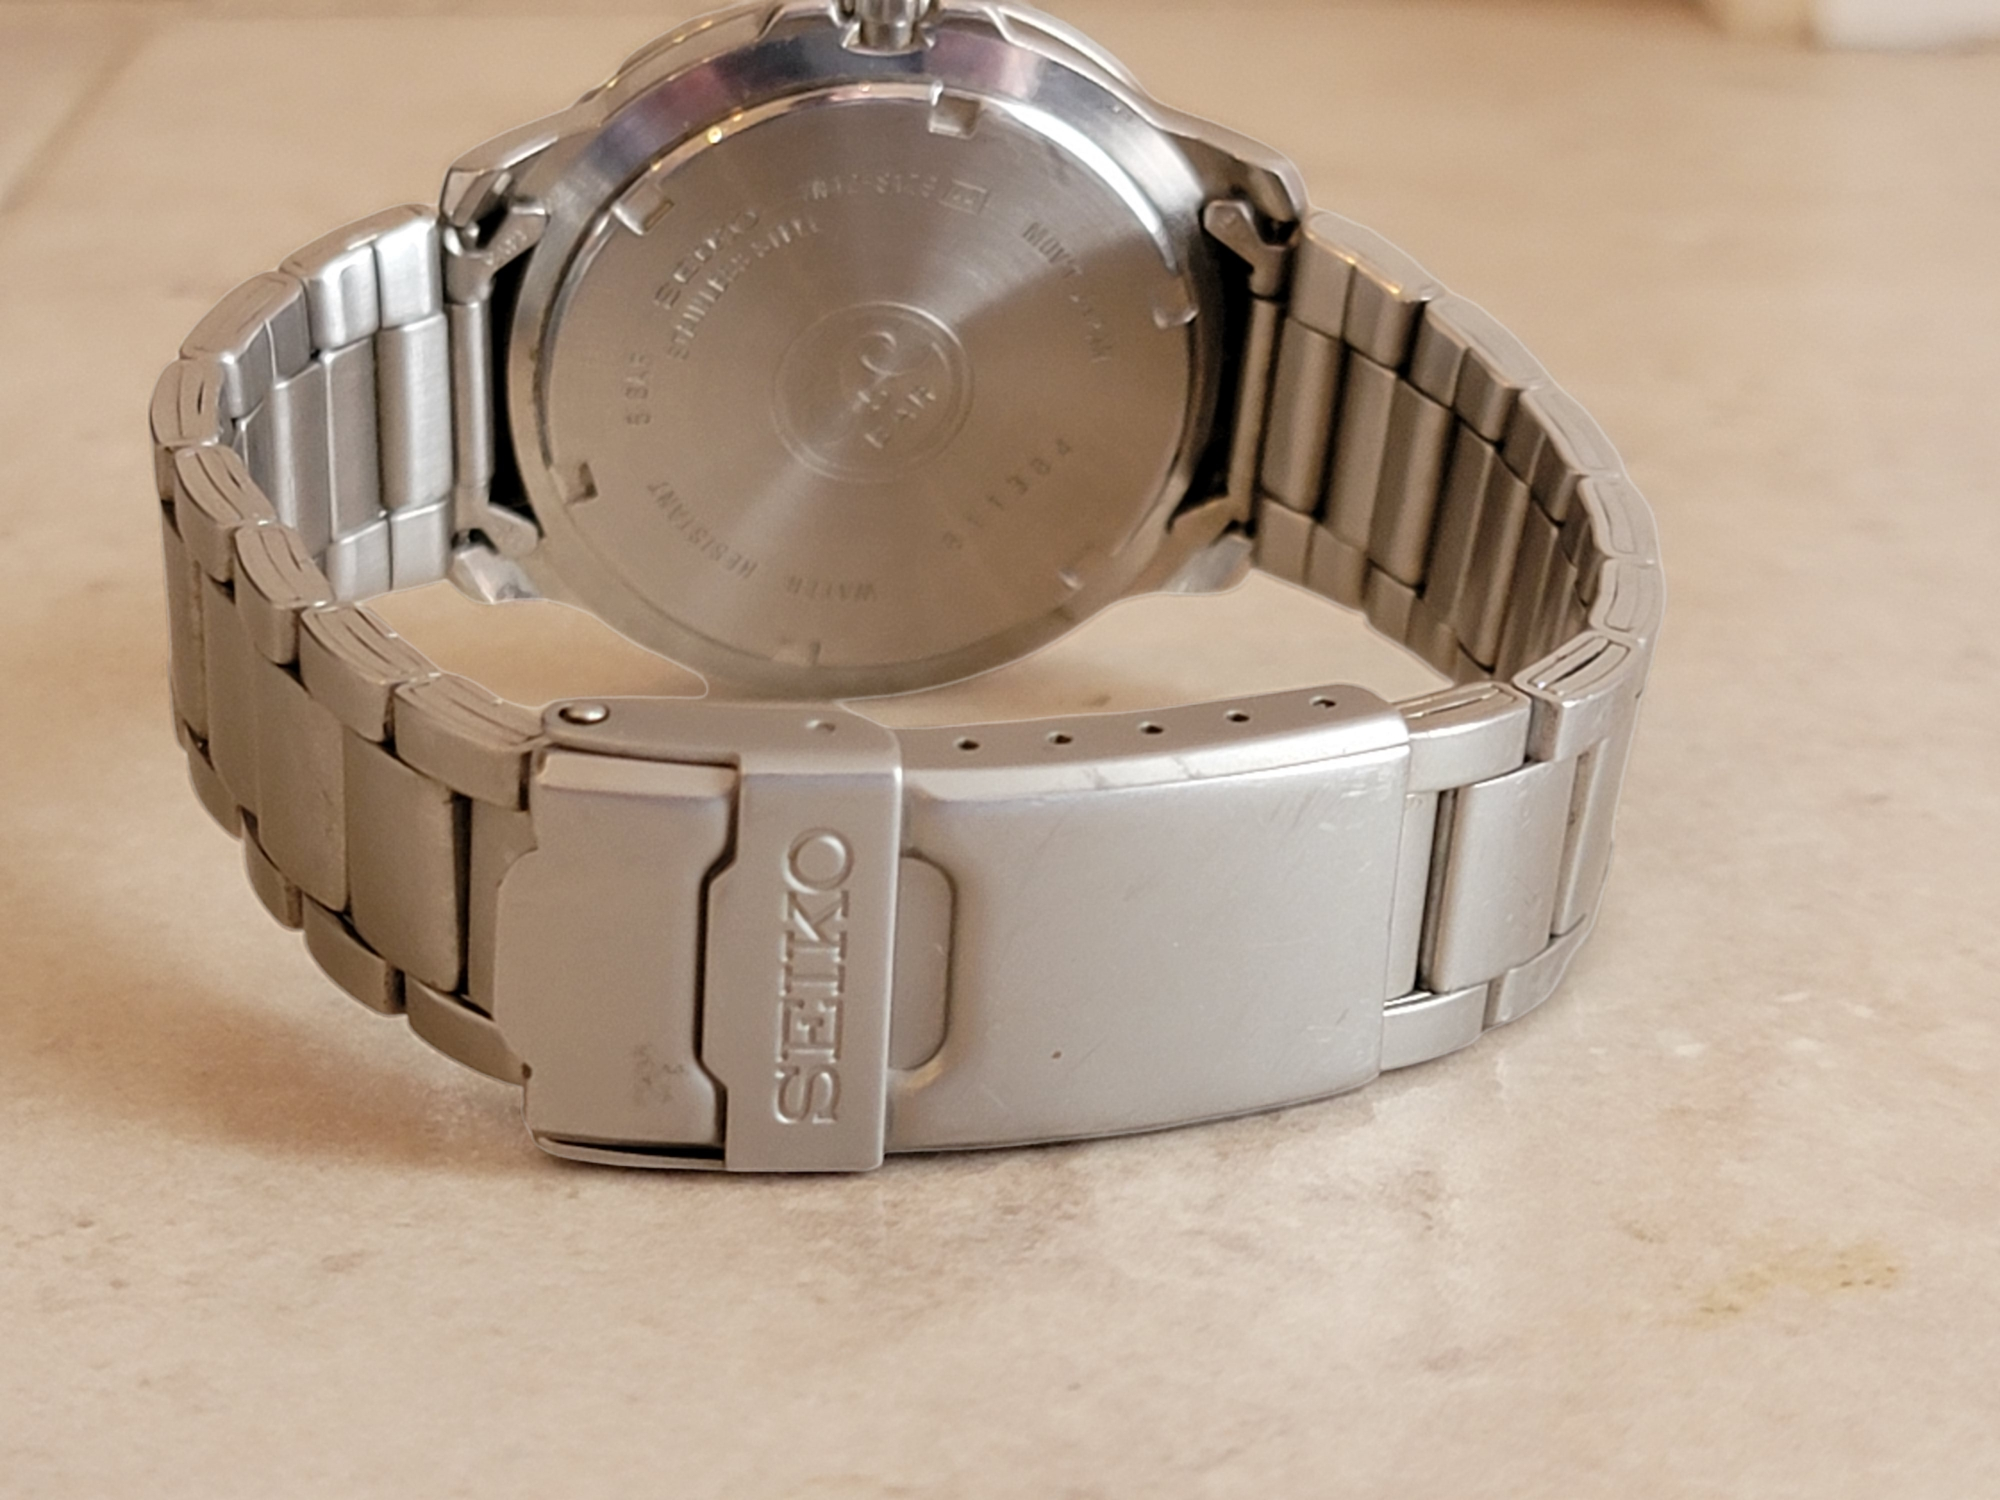 1998 SEIKO Quartz Watch -Diver Style- Date Indicator